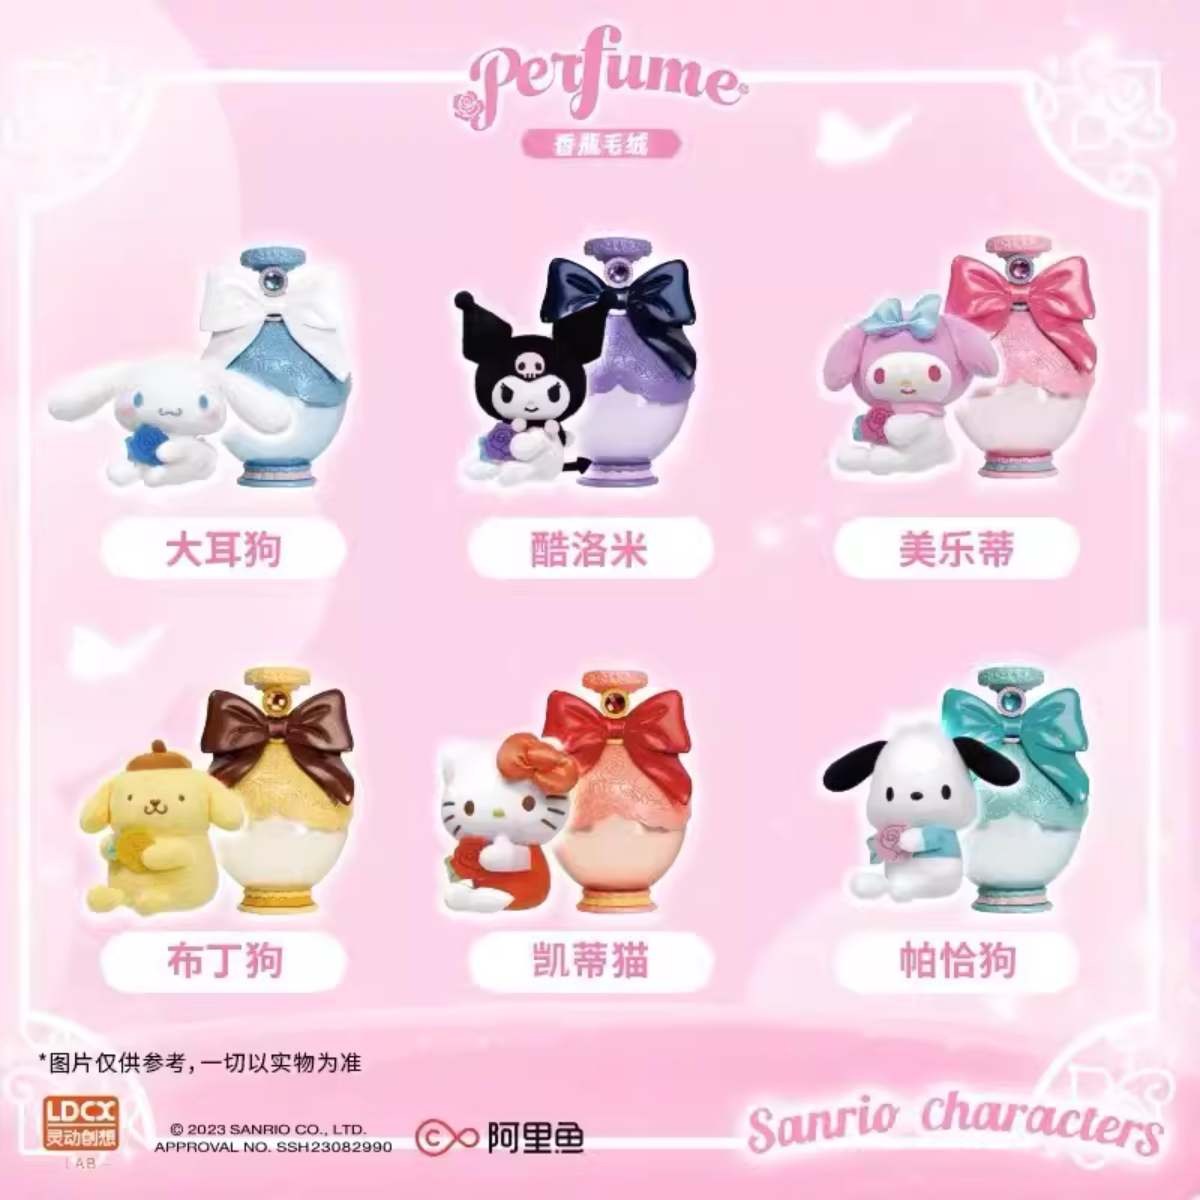 LDCX x Sanrio Characters Perfume Plush Series-Single Box (Random)-LDCX LAB-Ace Cards & Collectibles